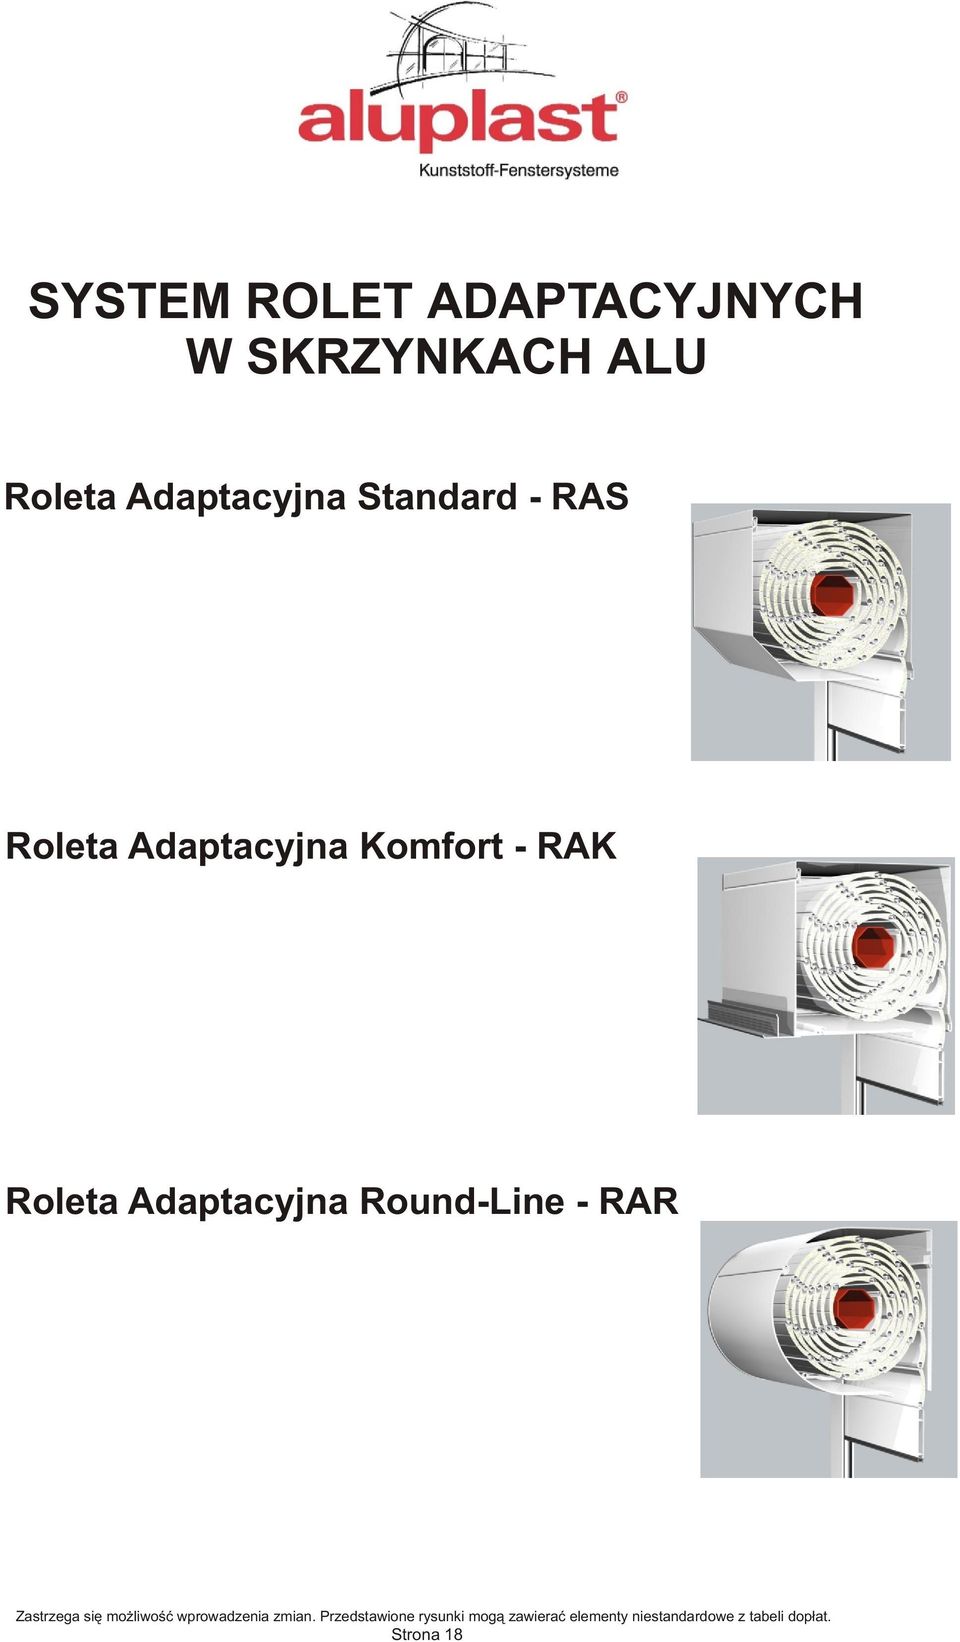 Standard - RAS Roleta Adaptacyjna